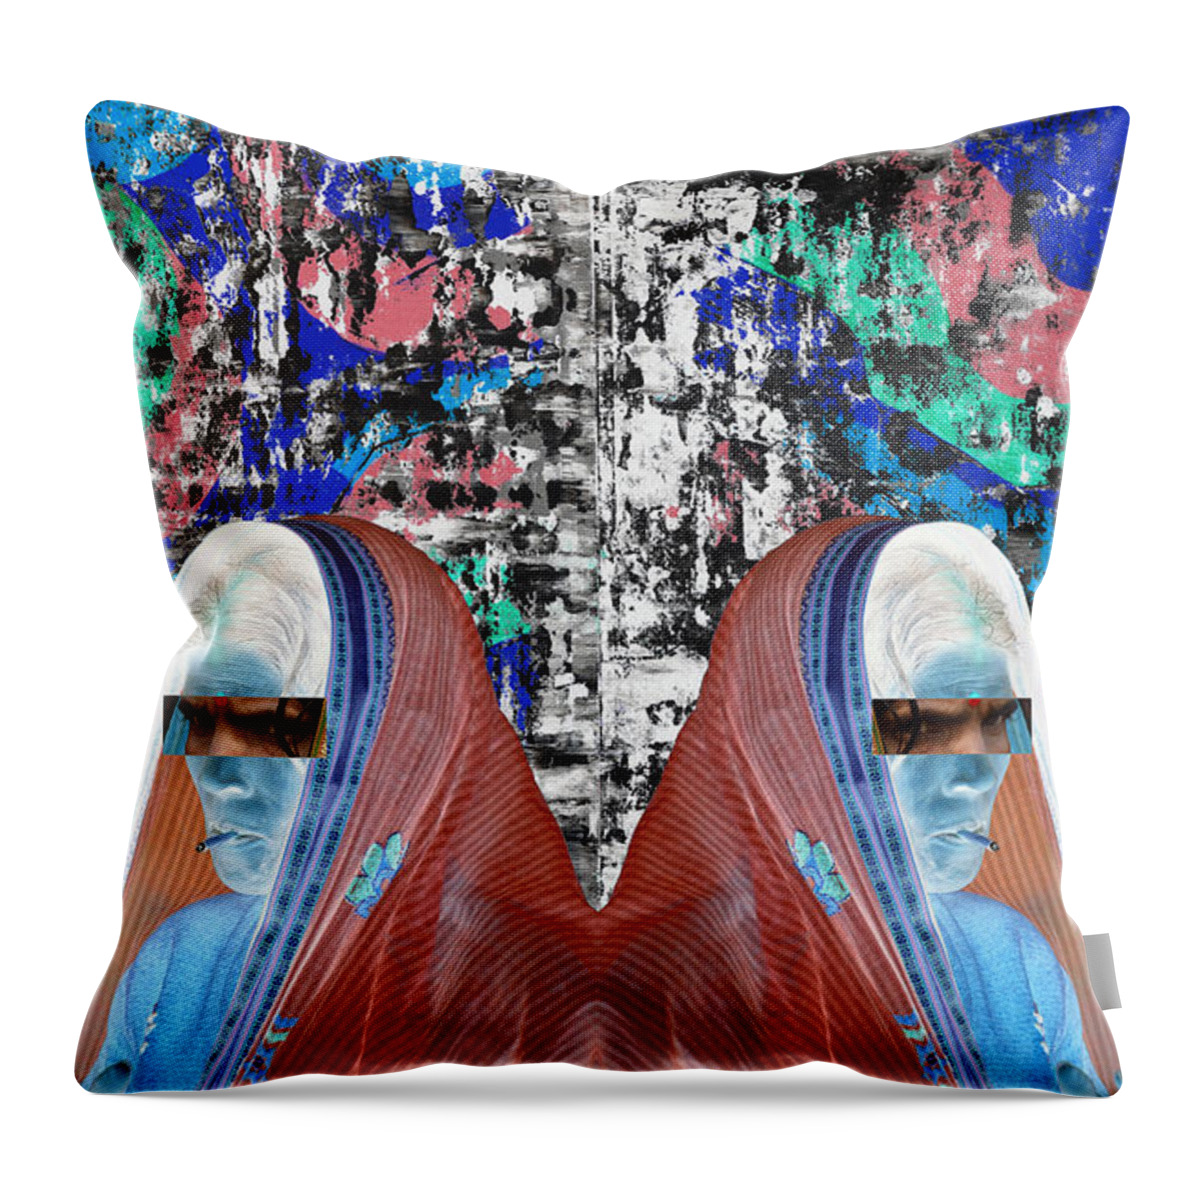 Woman Throw Pillow featuring the digital art Smoke sutra by Sumit Mehndiratta